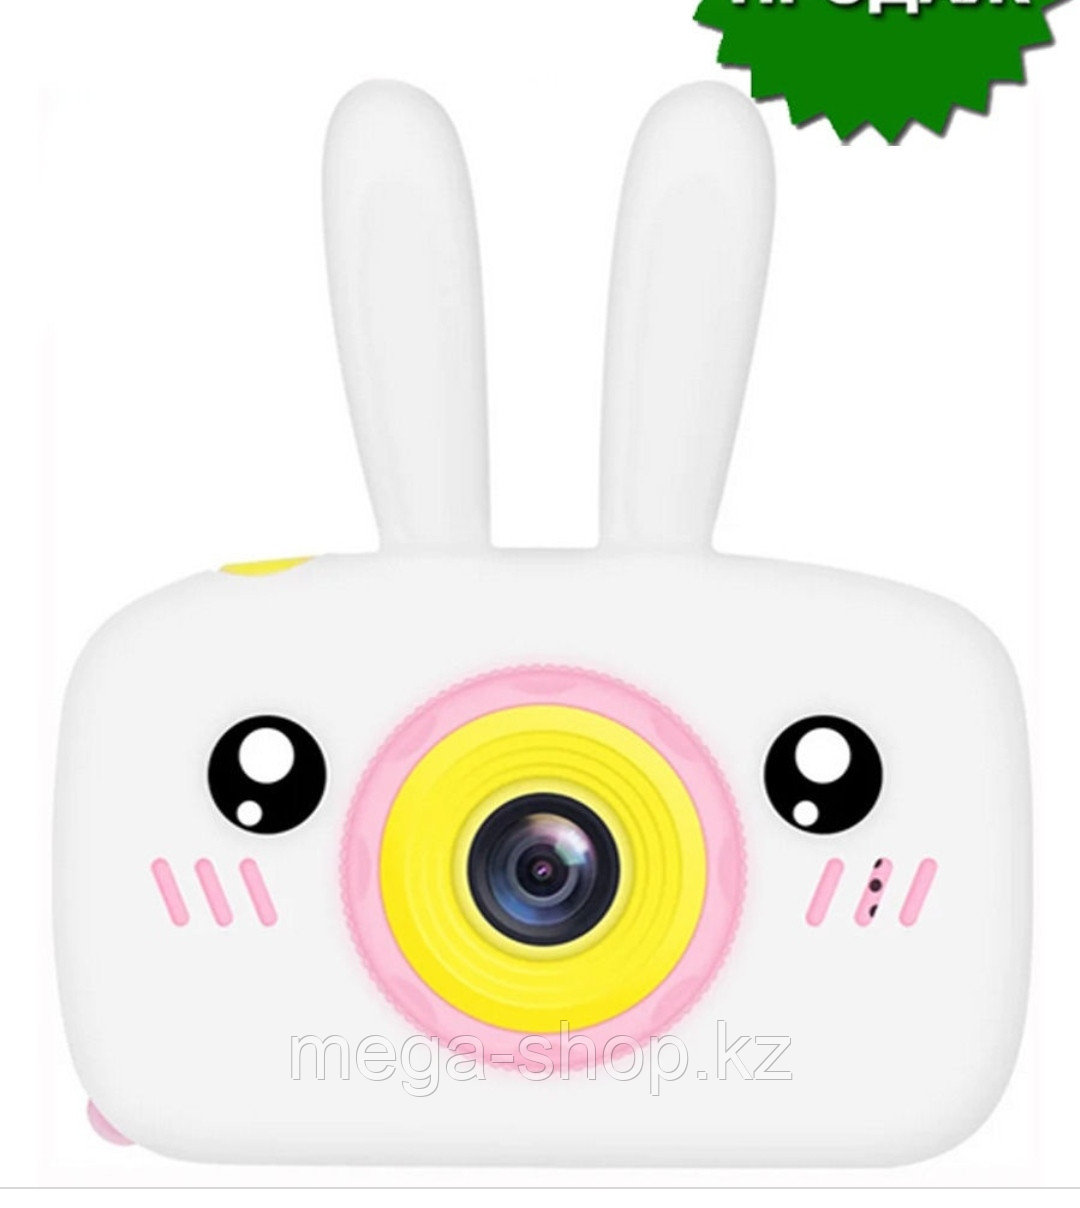 Детский цифровой фотоаппарат Smart Kids Series 3 Rabbit 20 Мп зайчик, фото 1